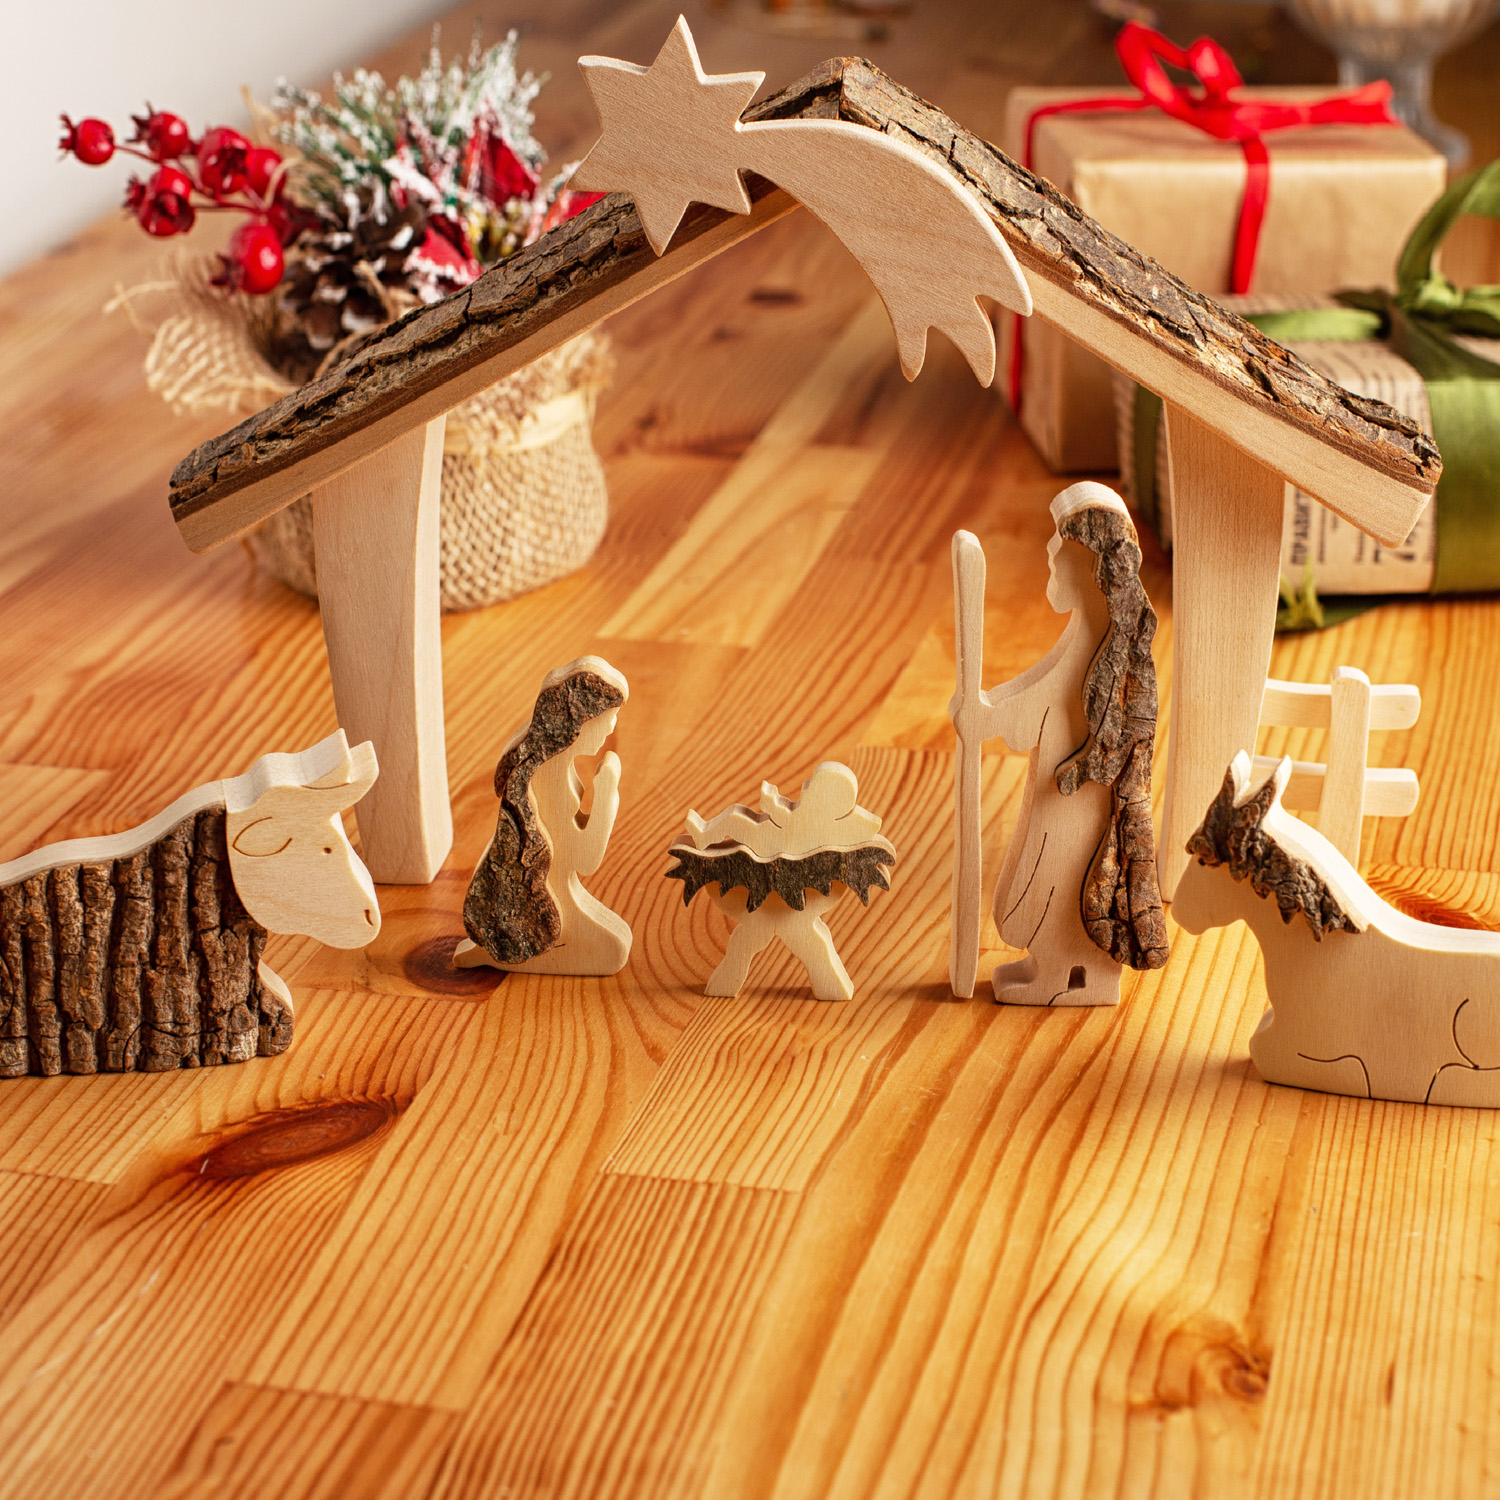 Handmade Christmas Nativity Scene Ornament